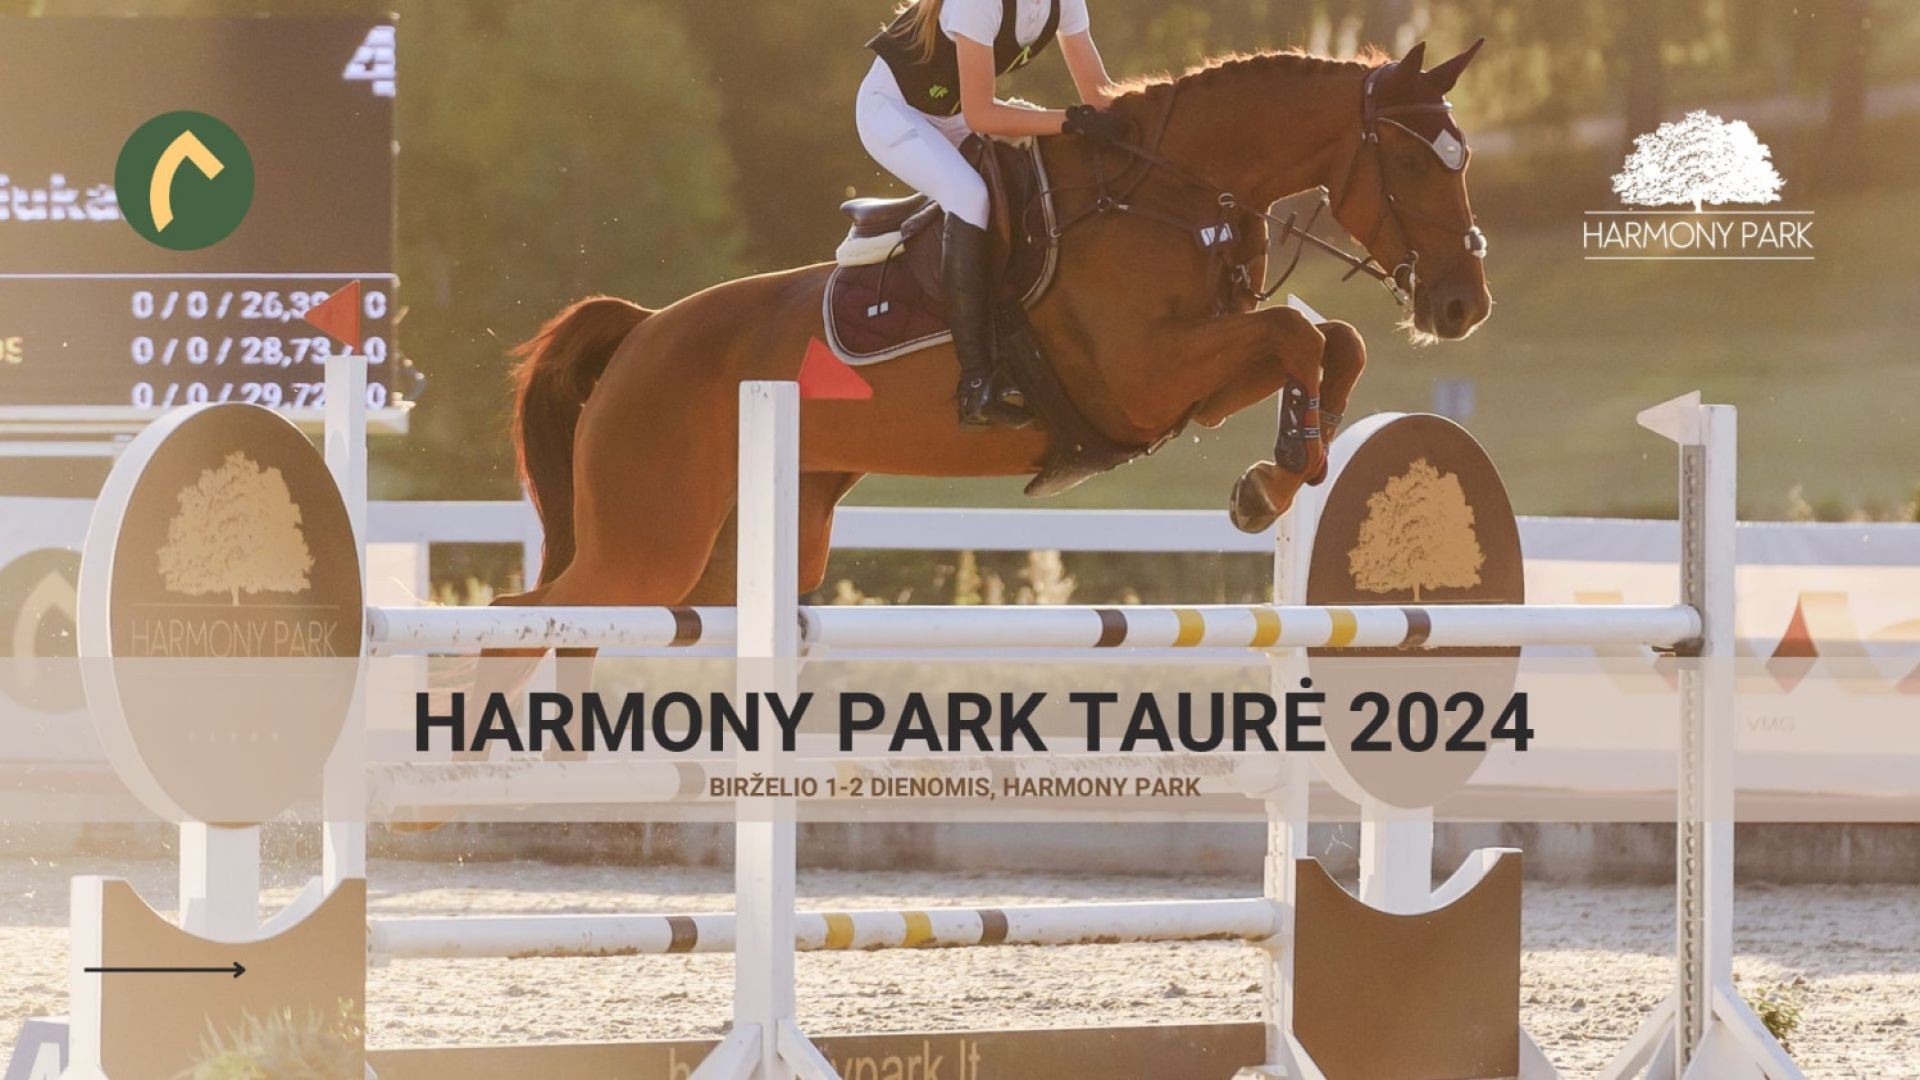 Harmony Park taurė 2024 LTU-2* (day 2)